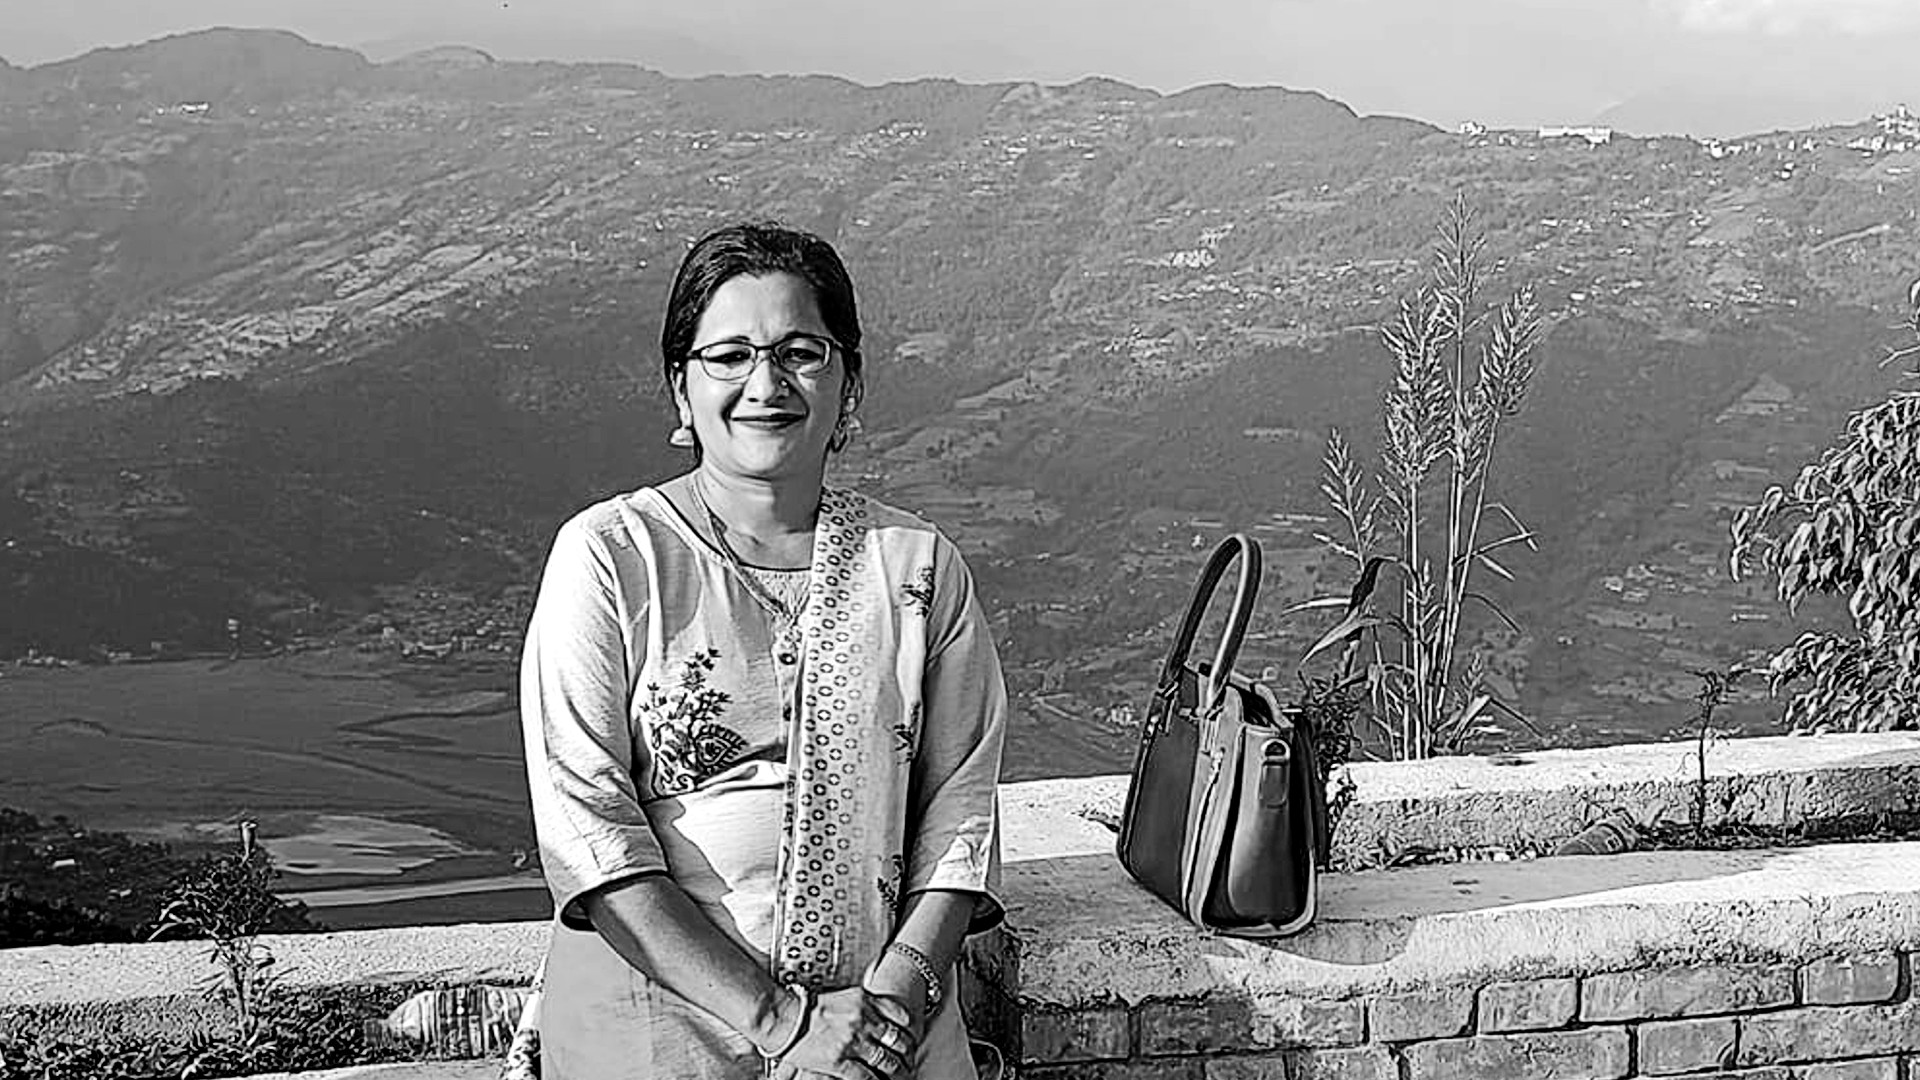 भूकम्पमा परी नलगाड नगरपालिकाकी उपप्रमुख सरिता सिंहको मृत्यु